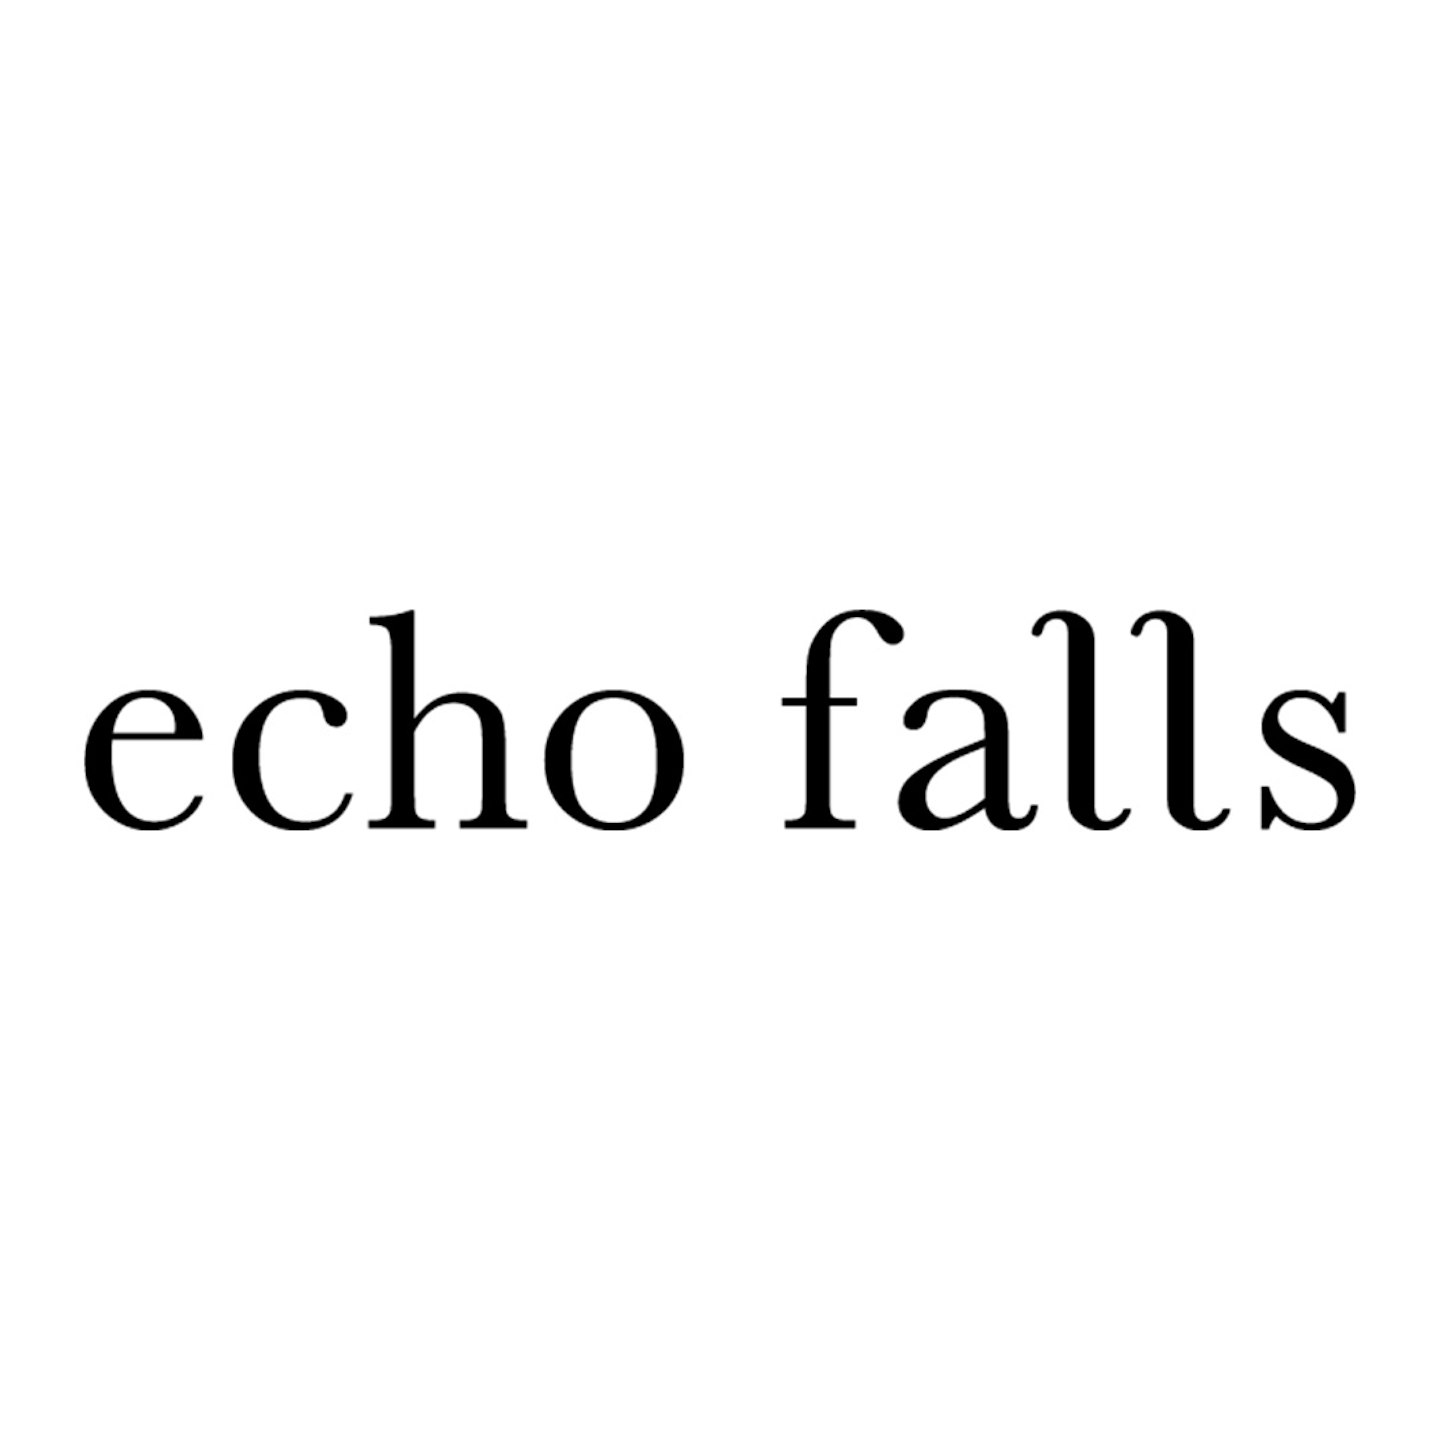 Echo Falls logo